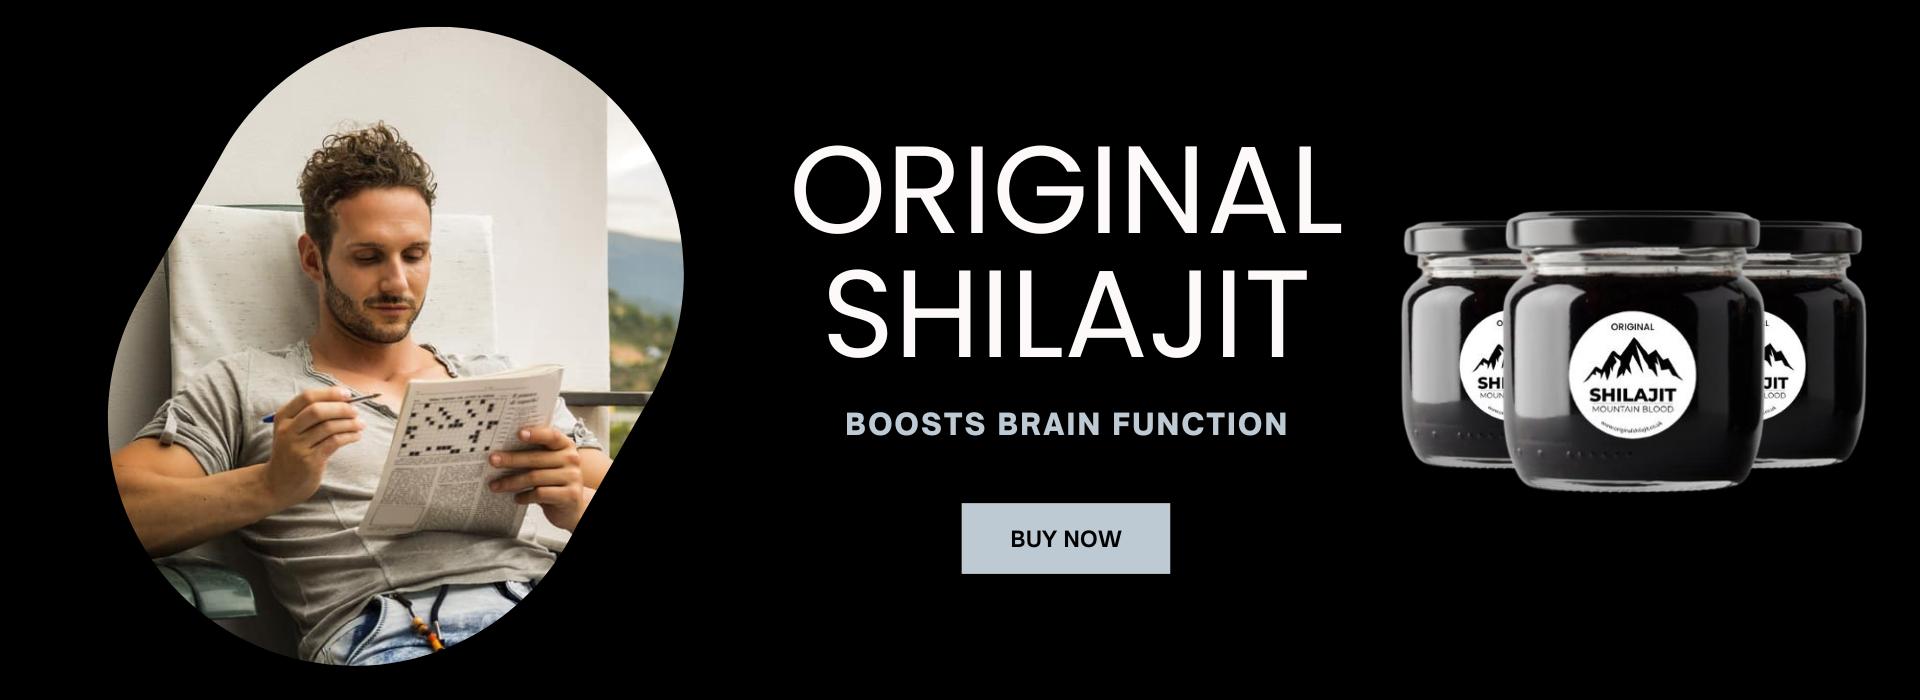 Original Shilajit Boost brain functions